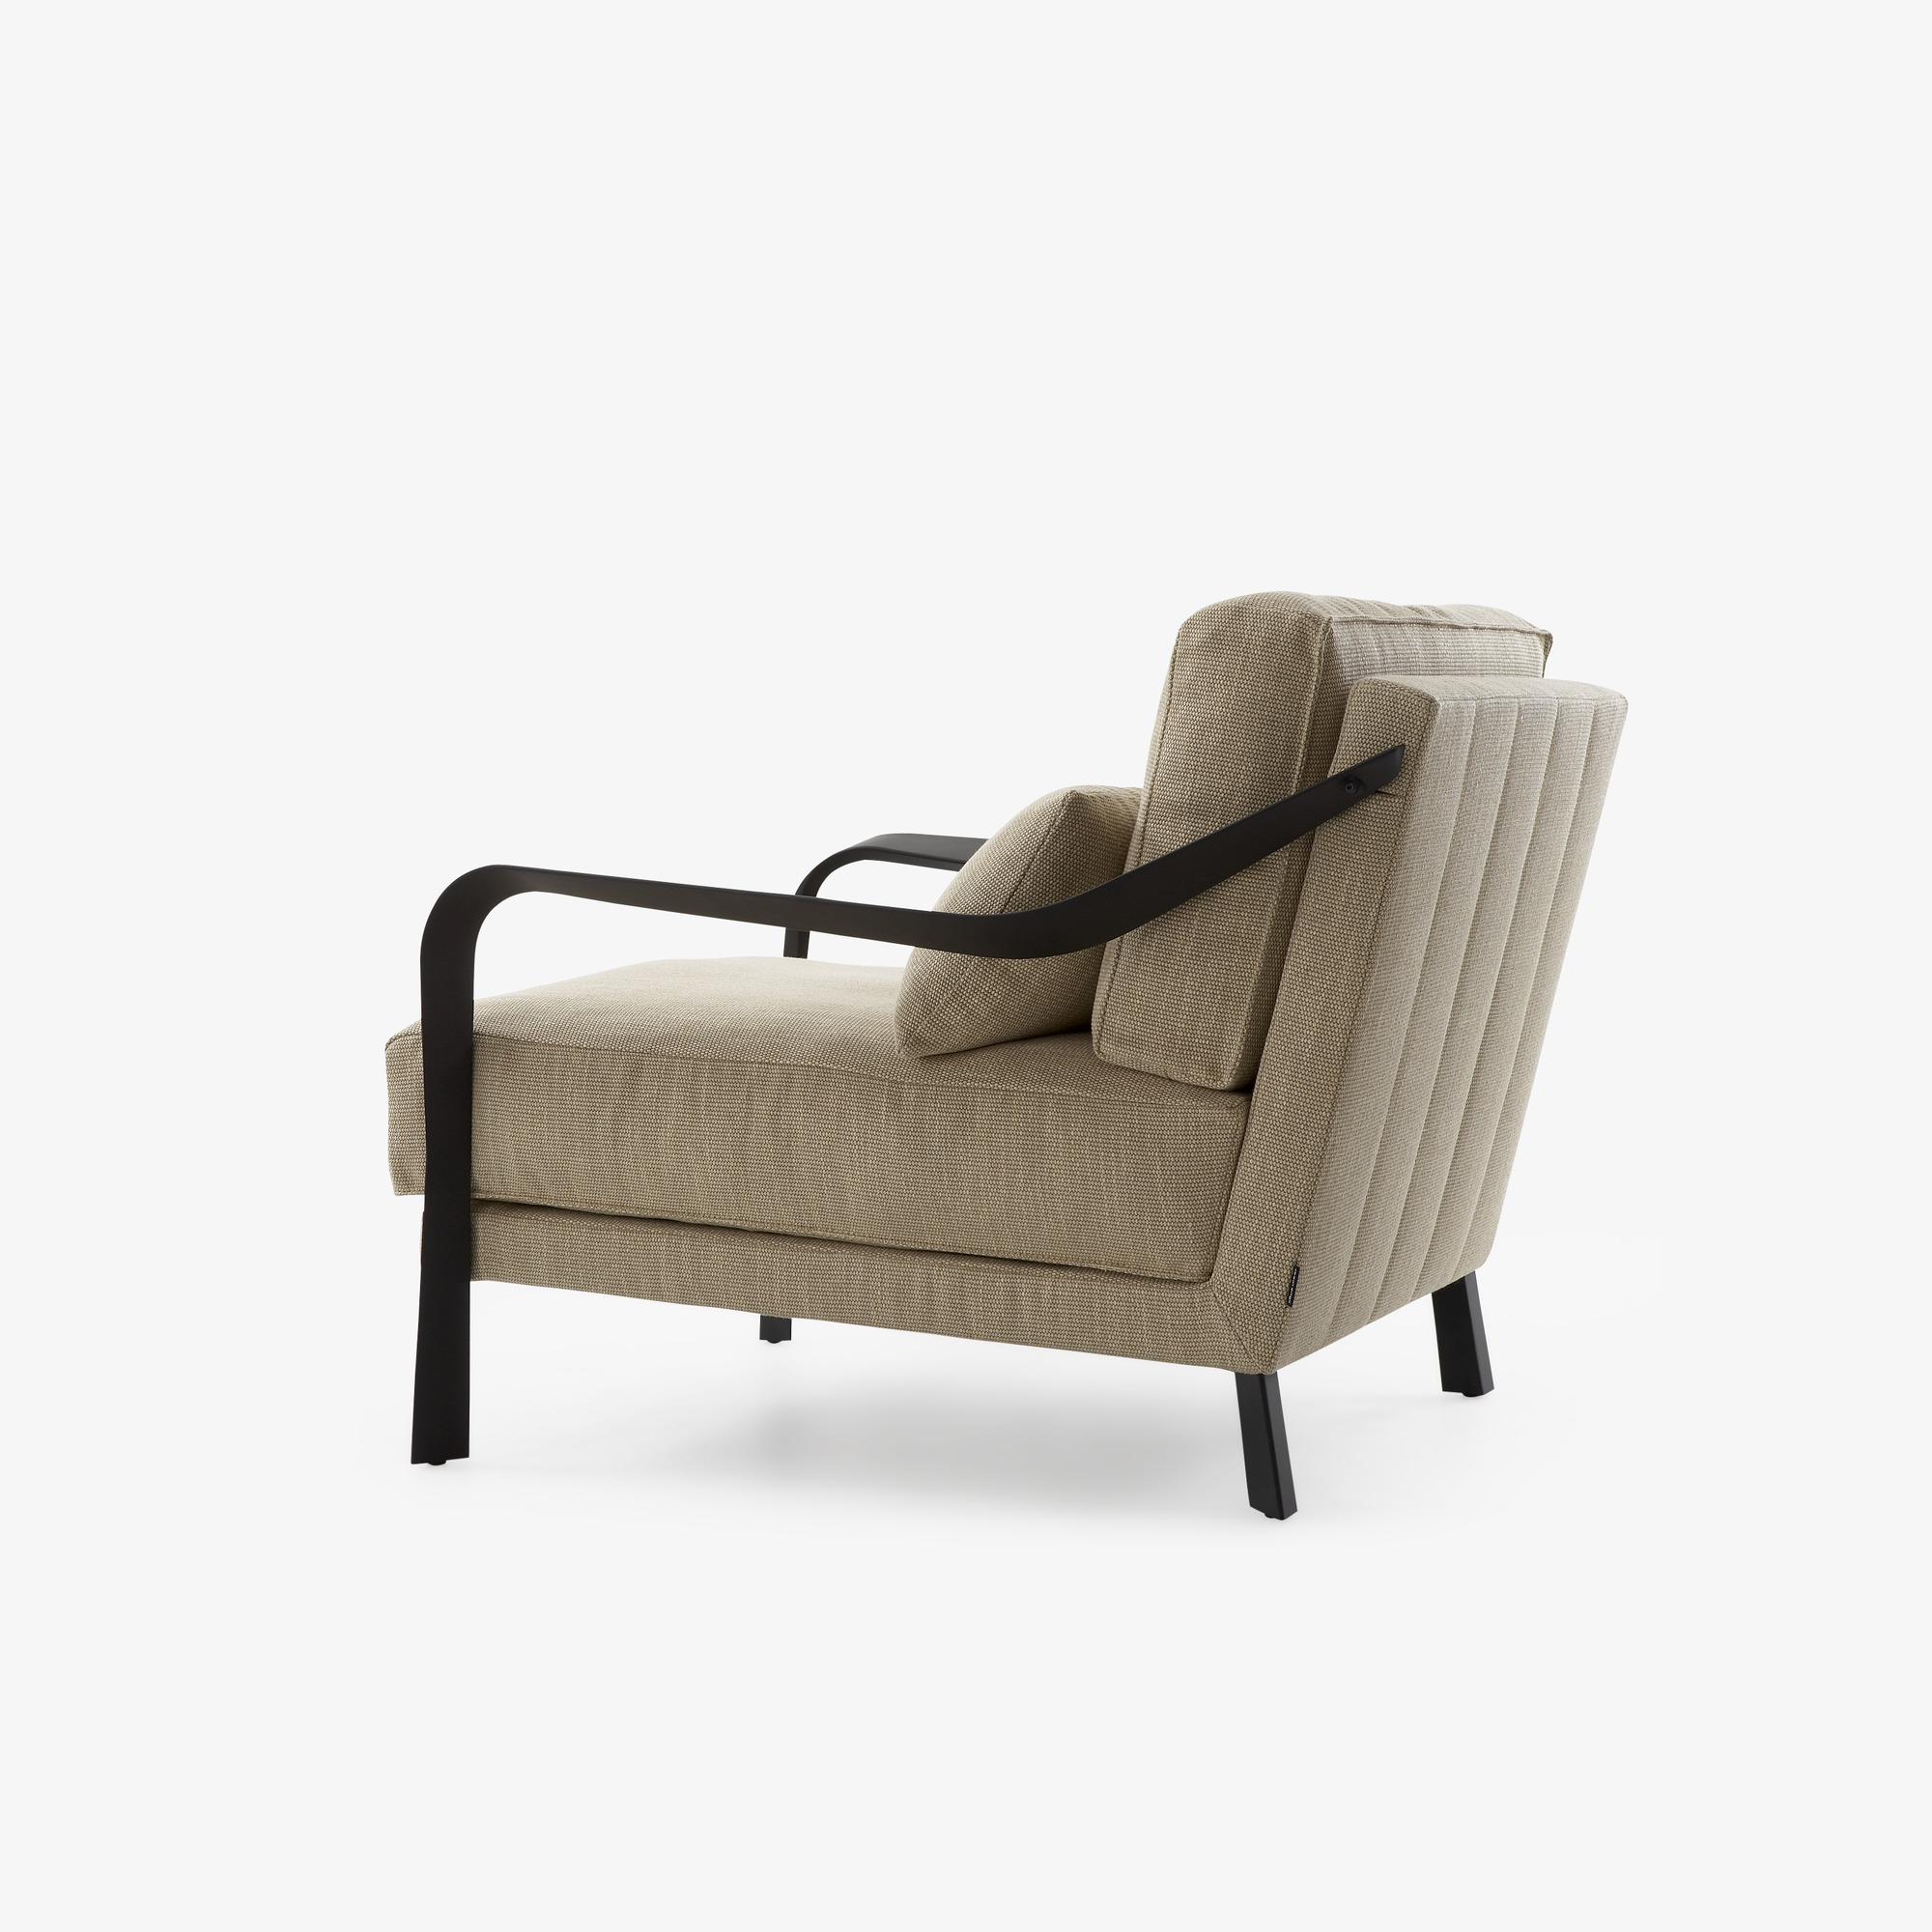 Image 扶手椅 铝制金属扶手 套件 3